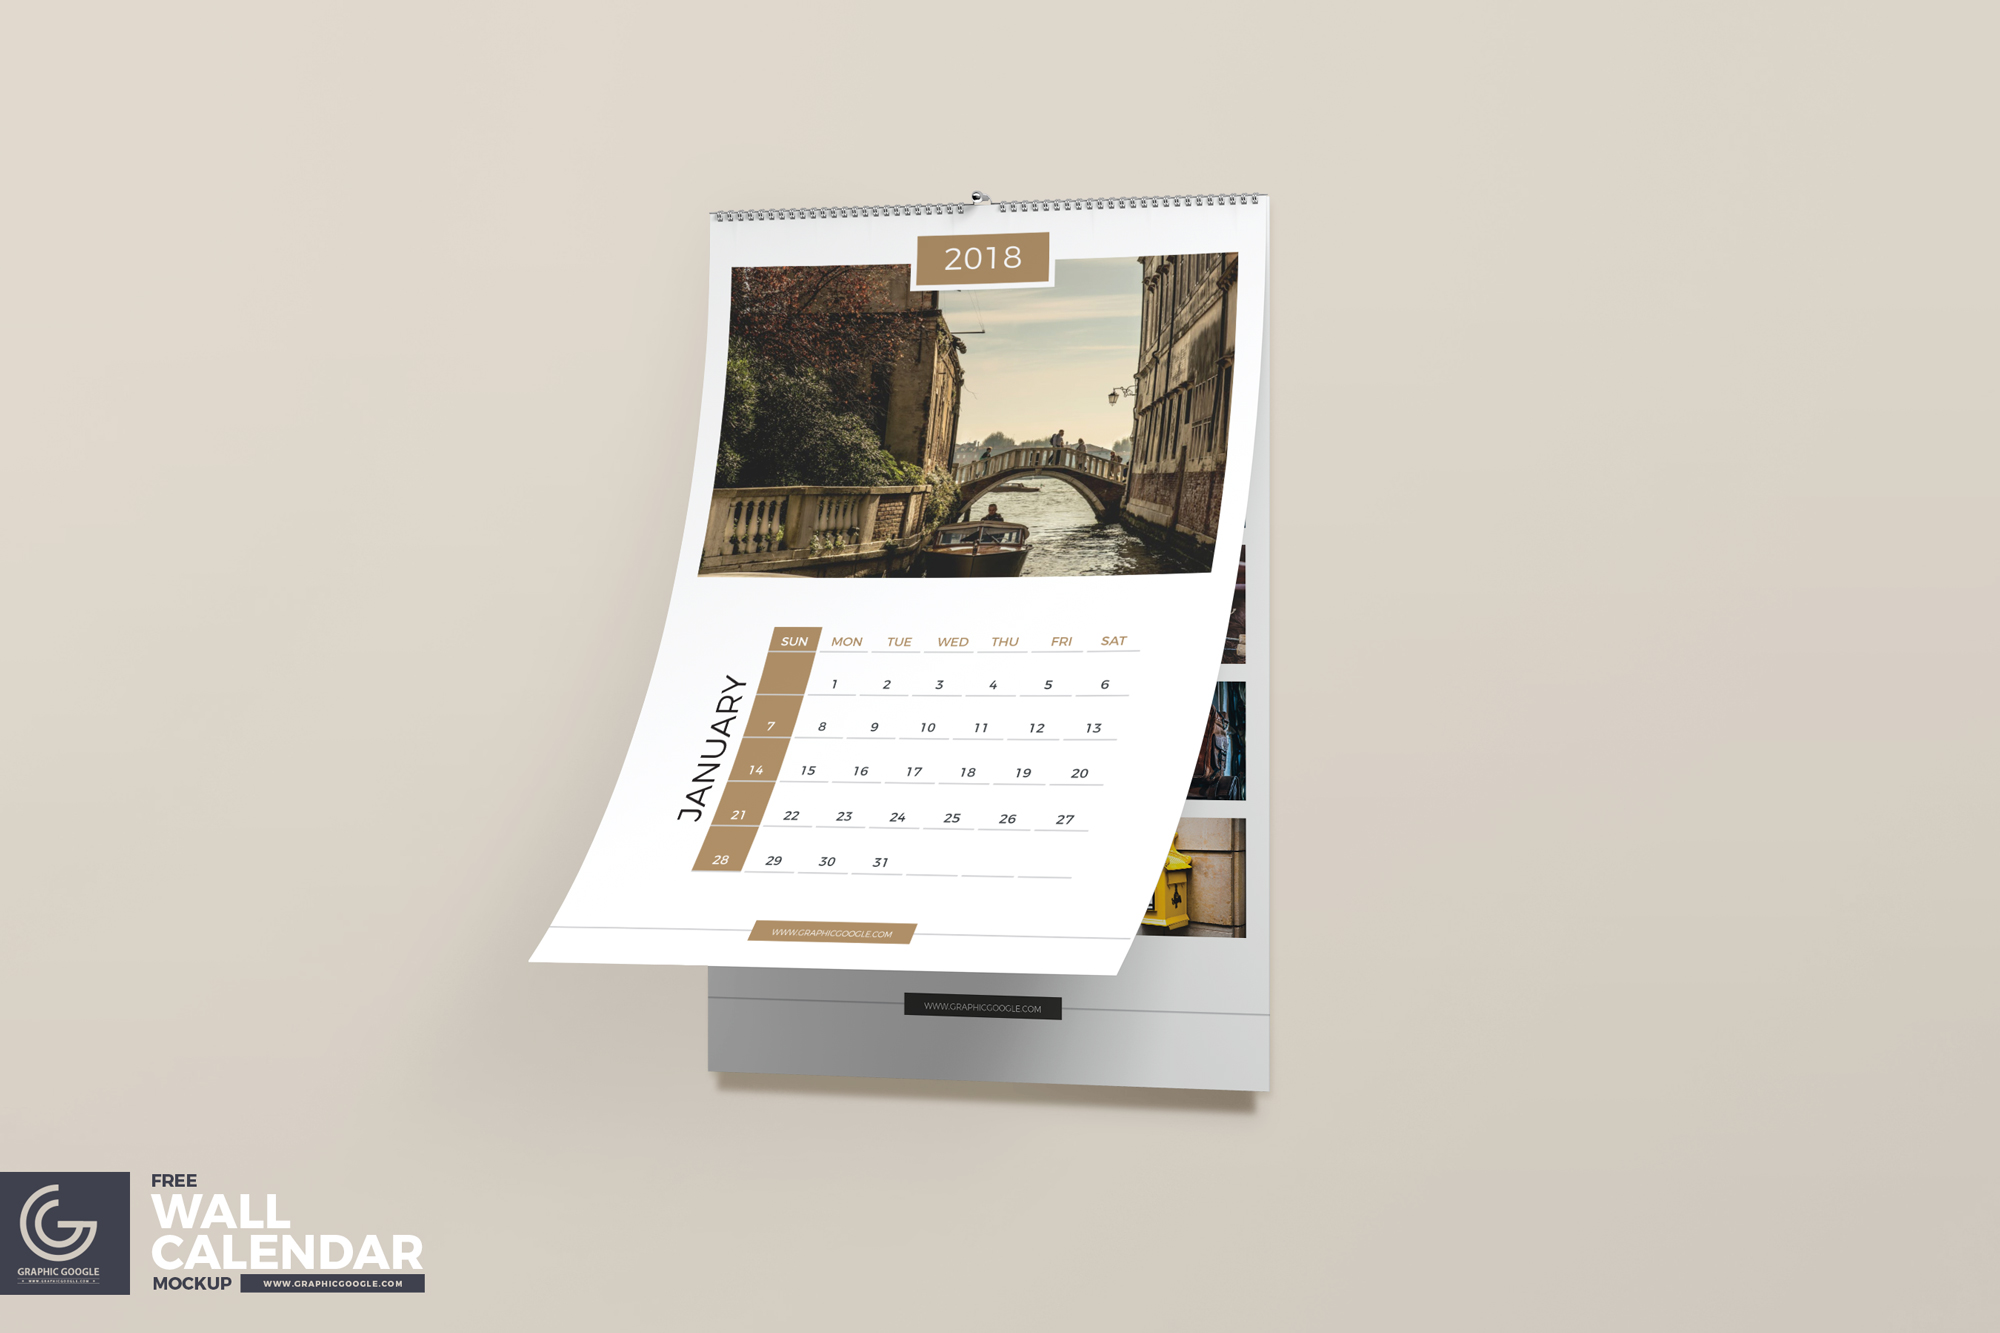 Free-Wall-Calendar-Mockup-600